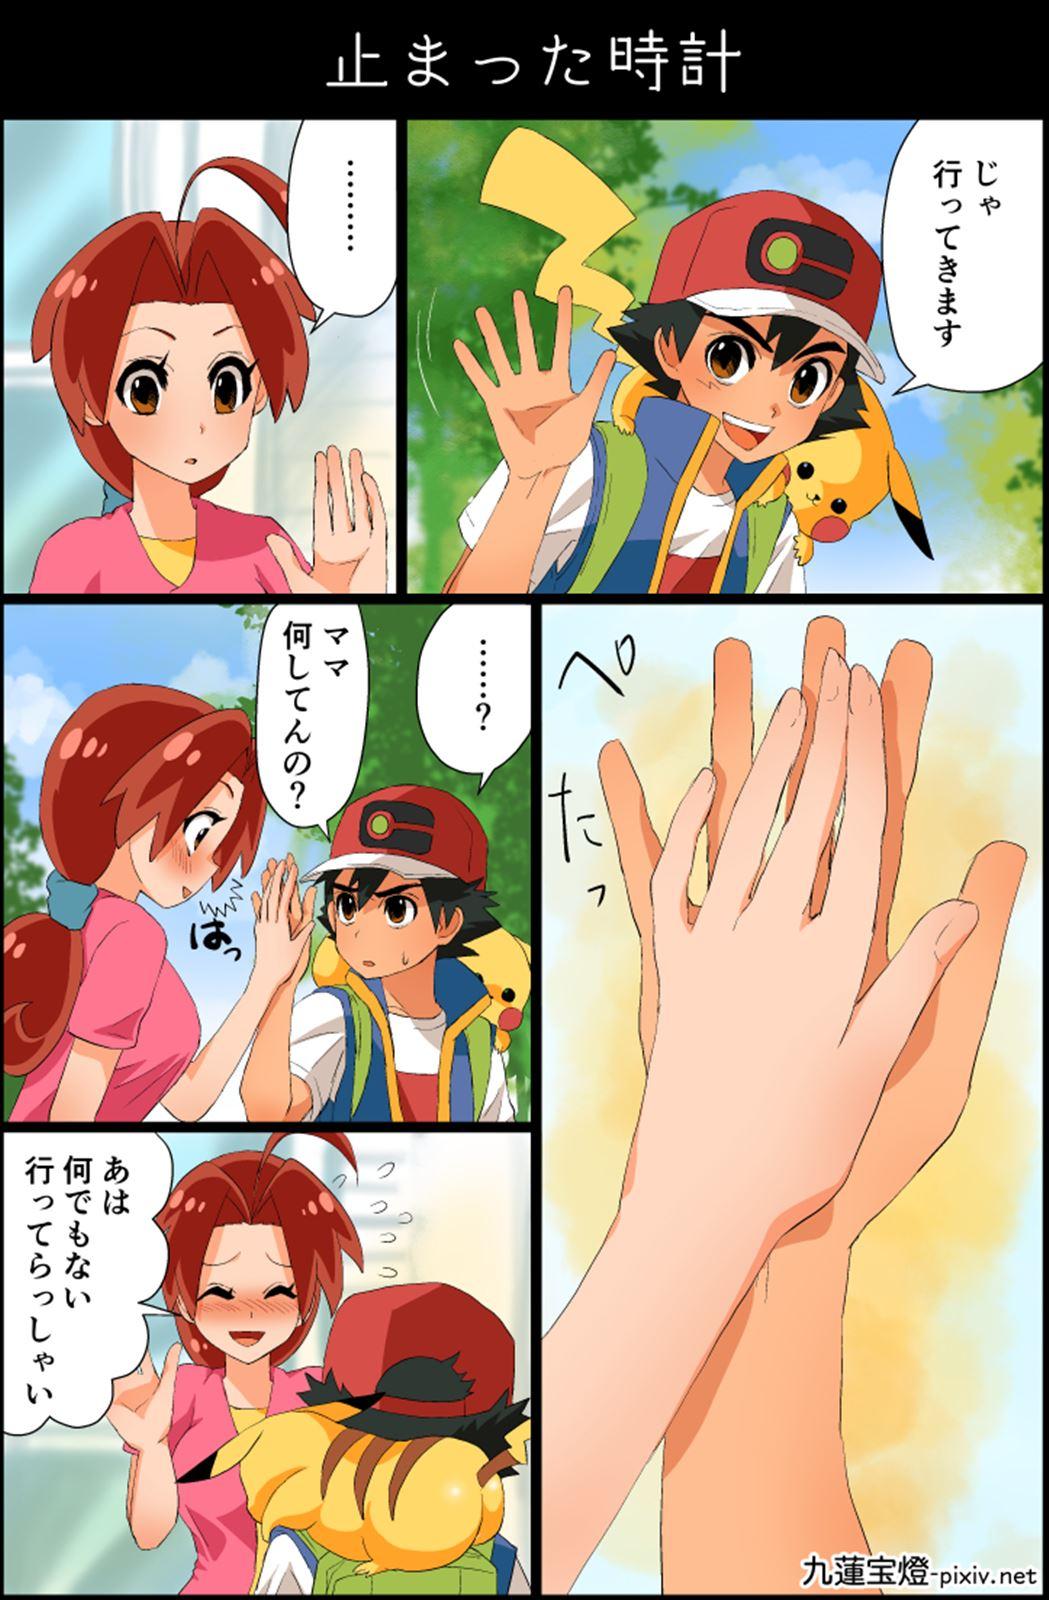 Amature サトハナえろ漫画 - Pokemon | pocket monsters Casado - Picture 3